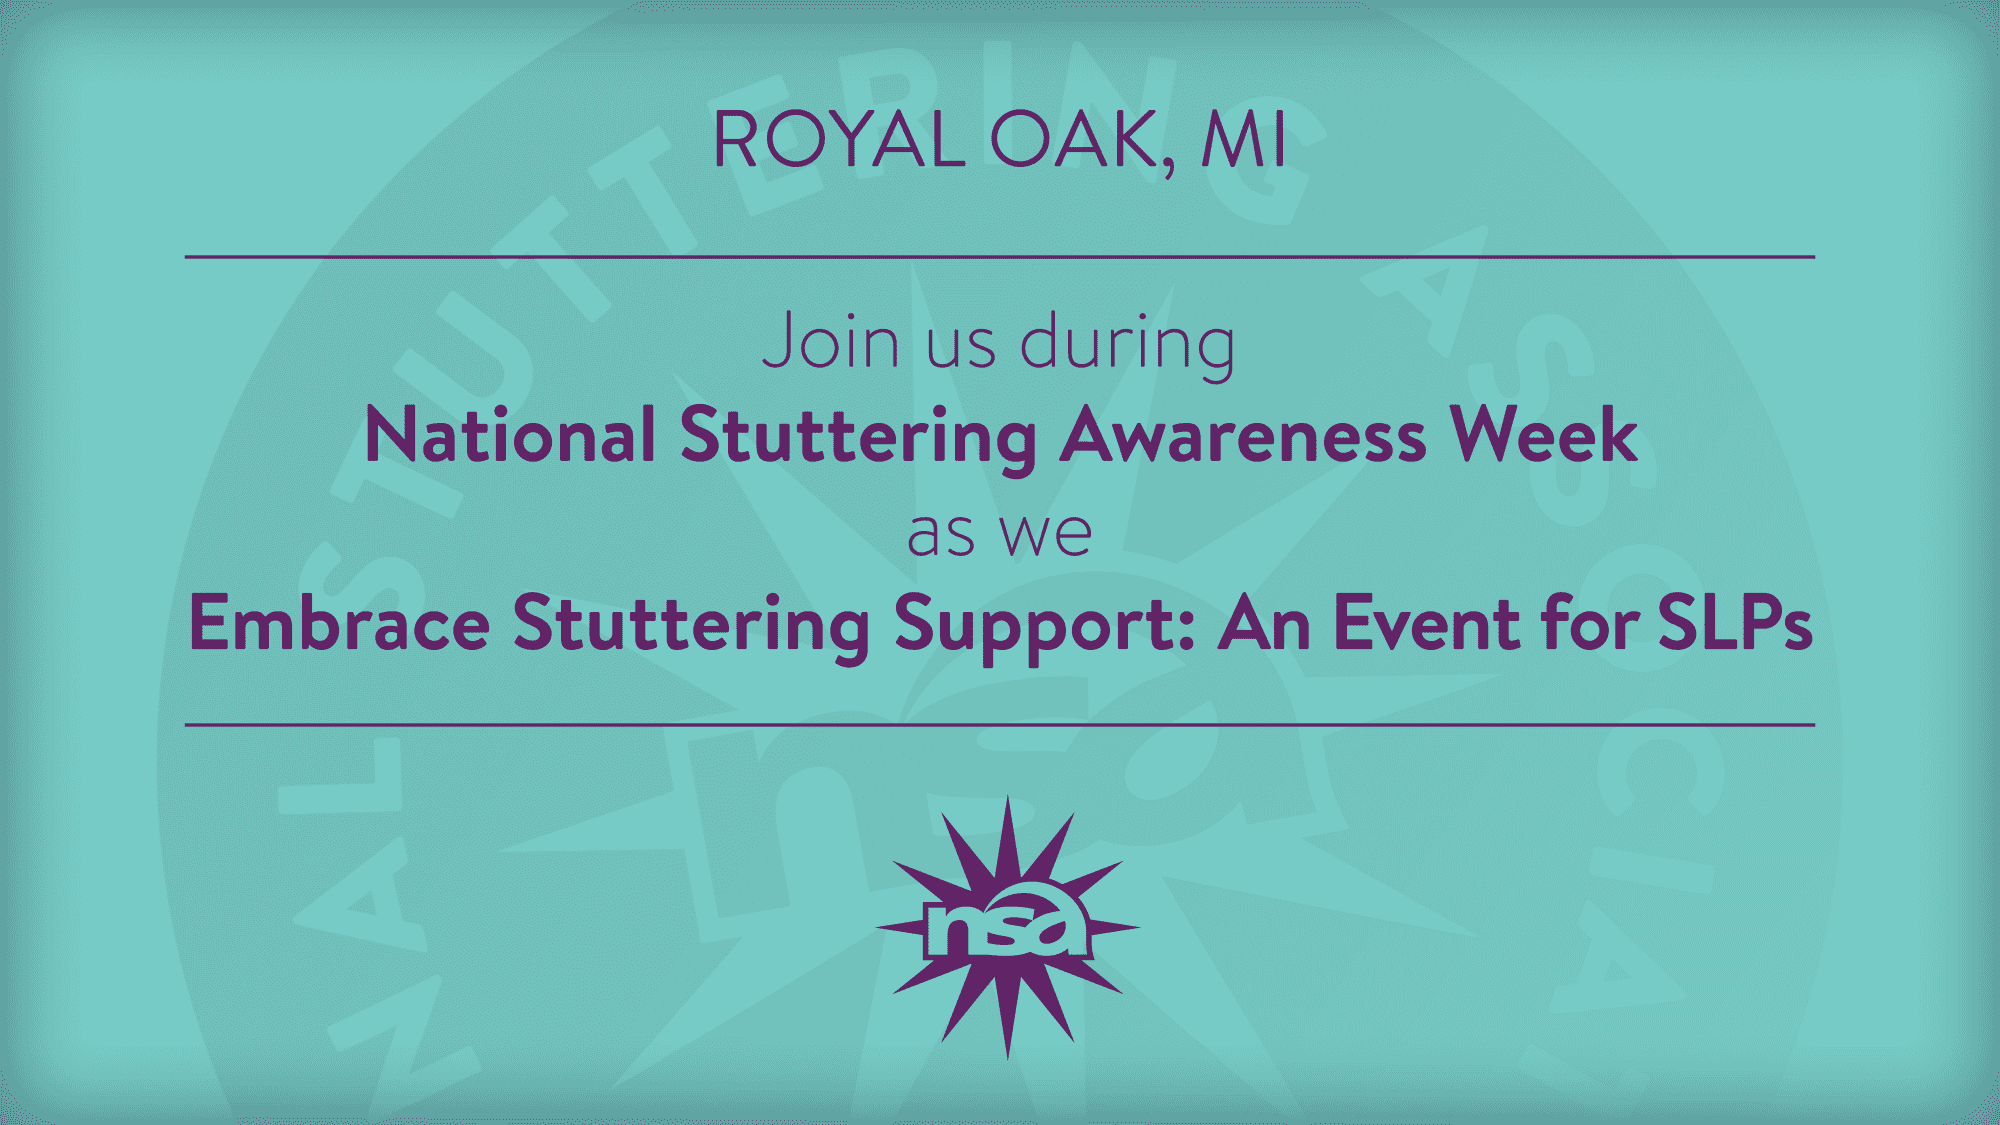 Royal Oak, MI Embrace Stuttering Support: An Event for SLPs